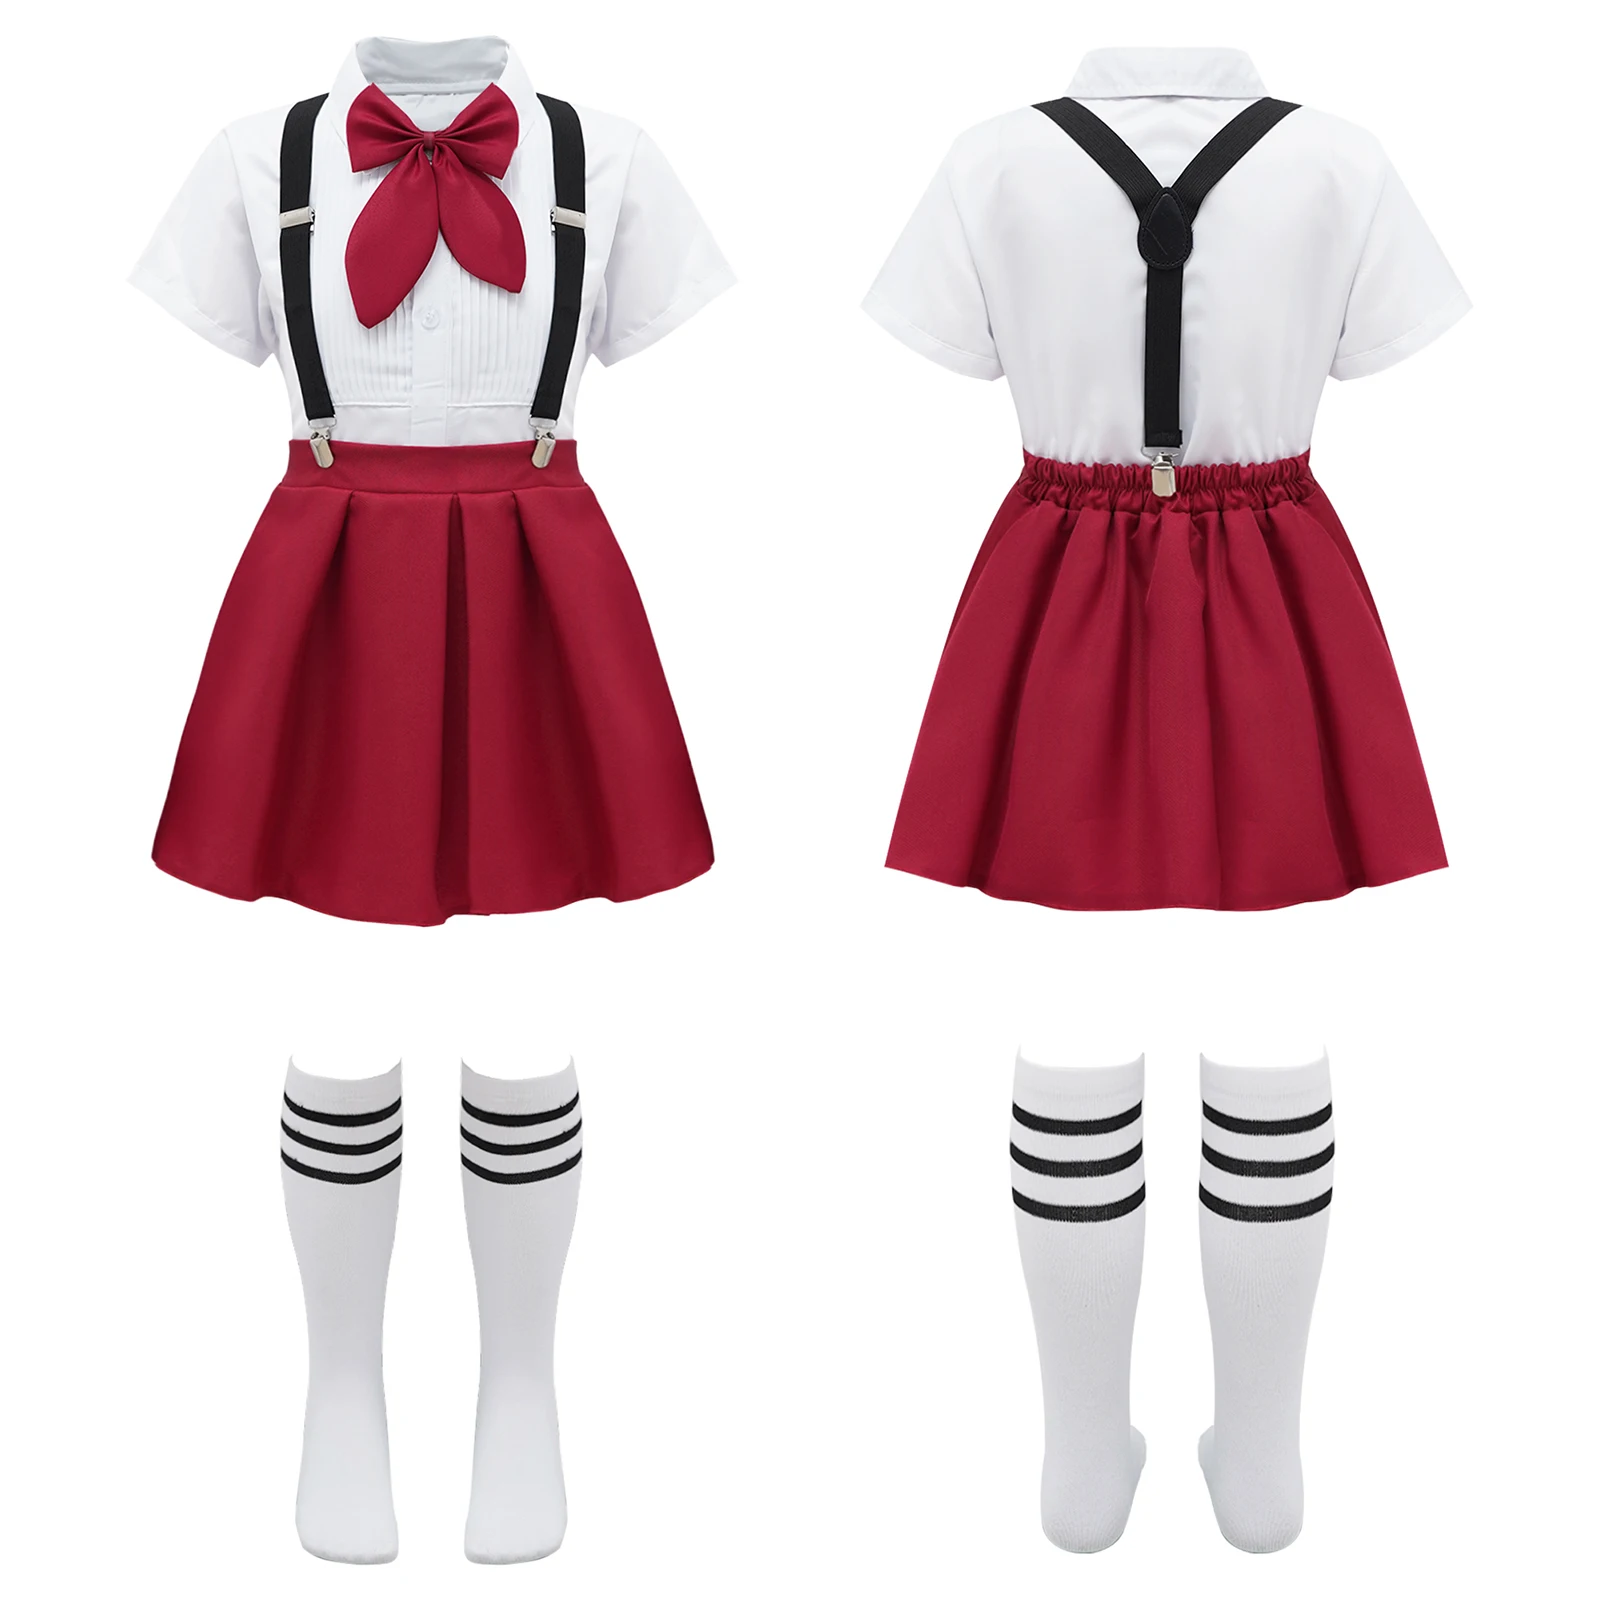 Kids Girls Student School Uniform Shirt Top with Suspenders Skirt Socks Children Choir Stage Performance Suit Schoolgirl Costume